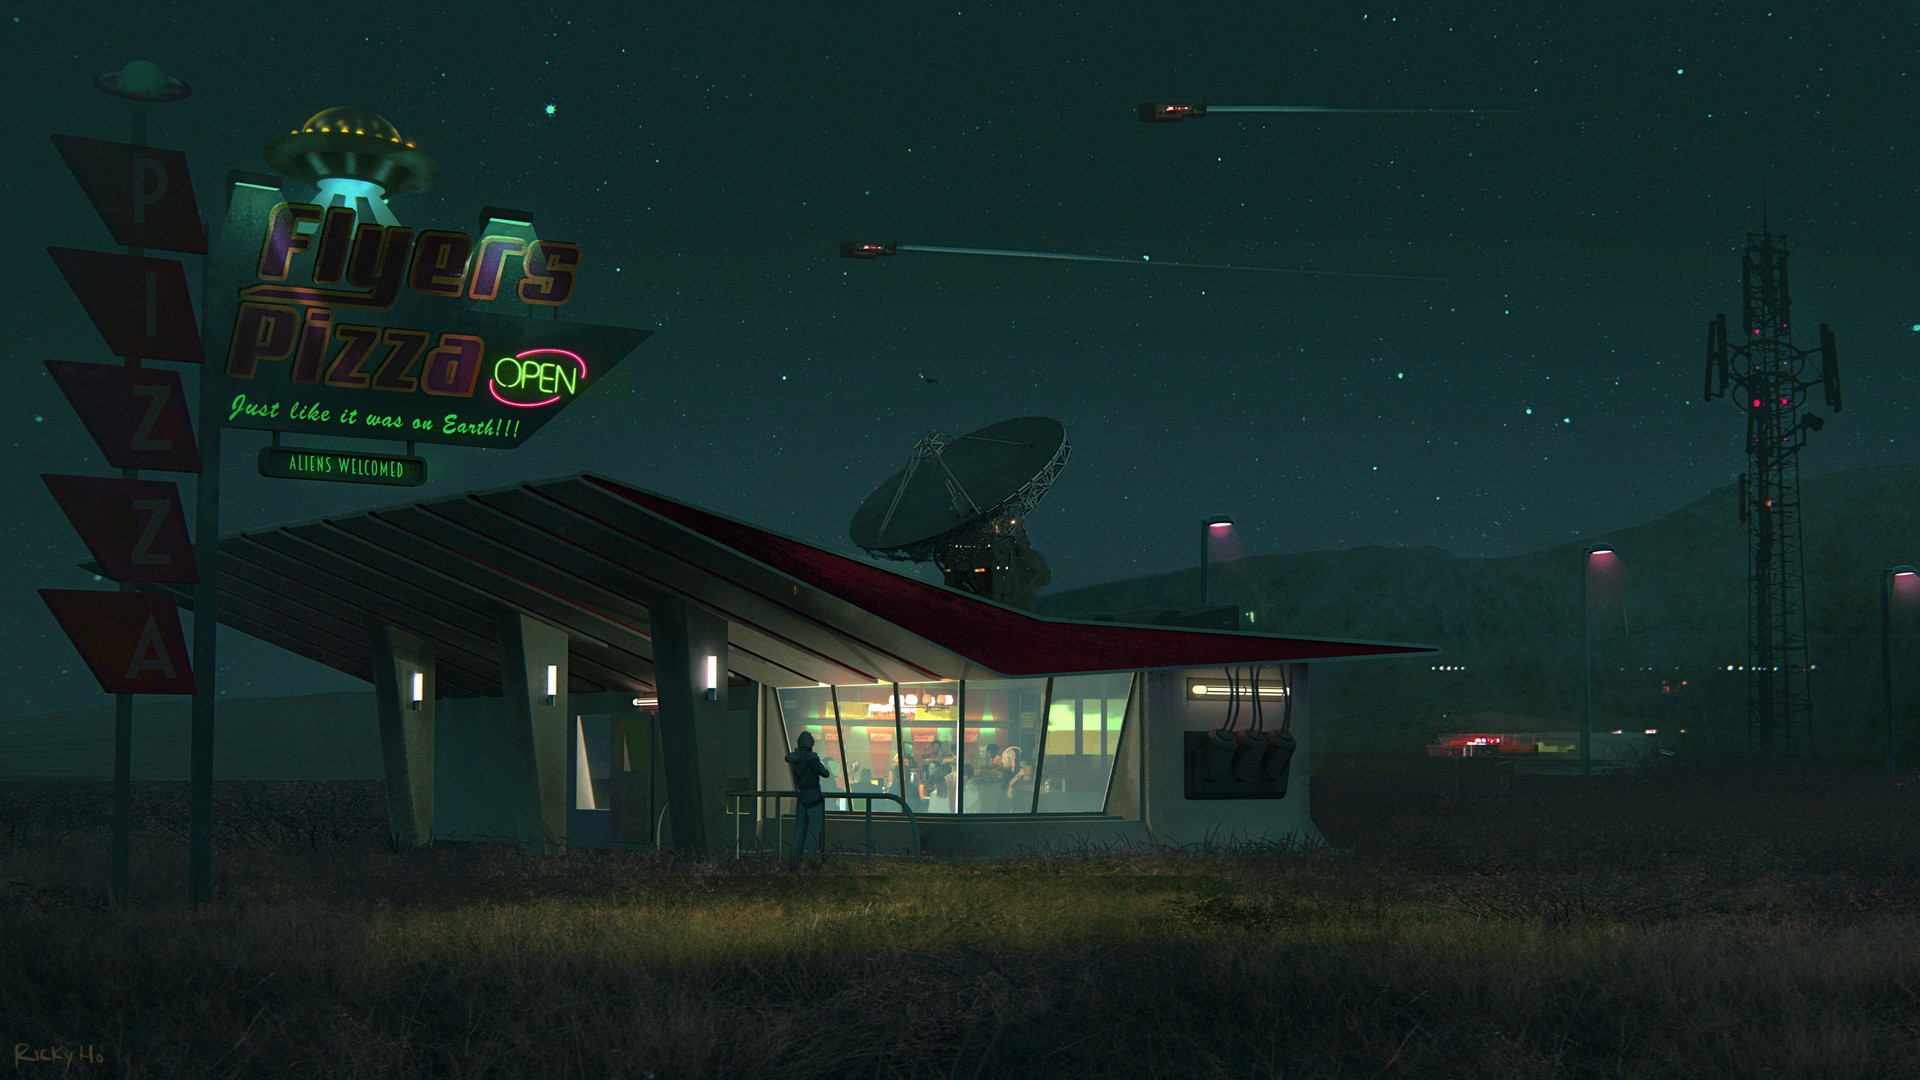 General 1920x1080 digital art science fiction pizza spaceship satellite night house stars neon text